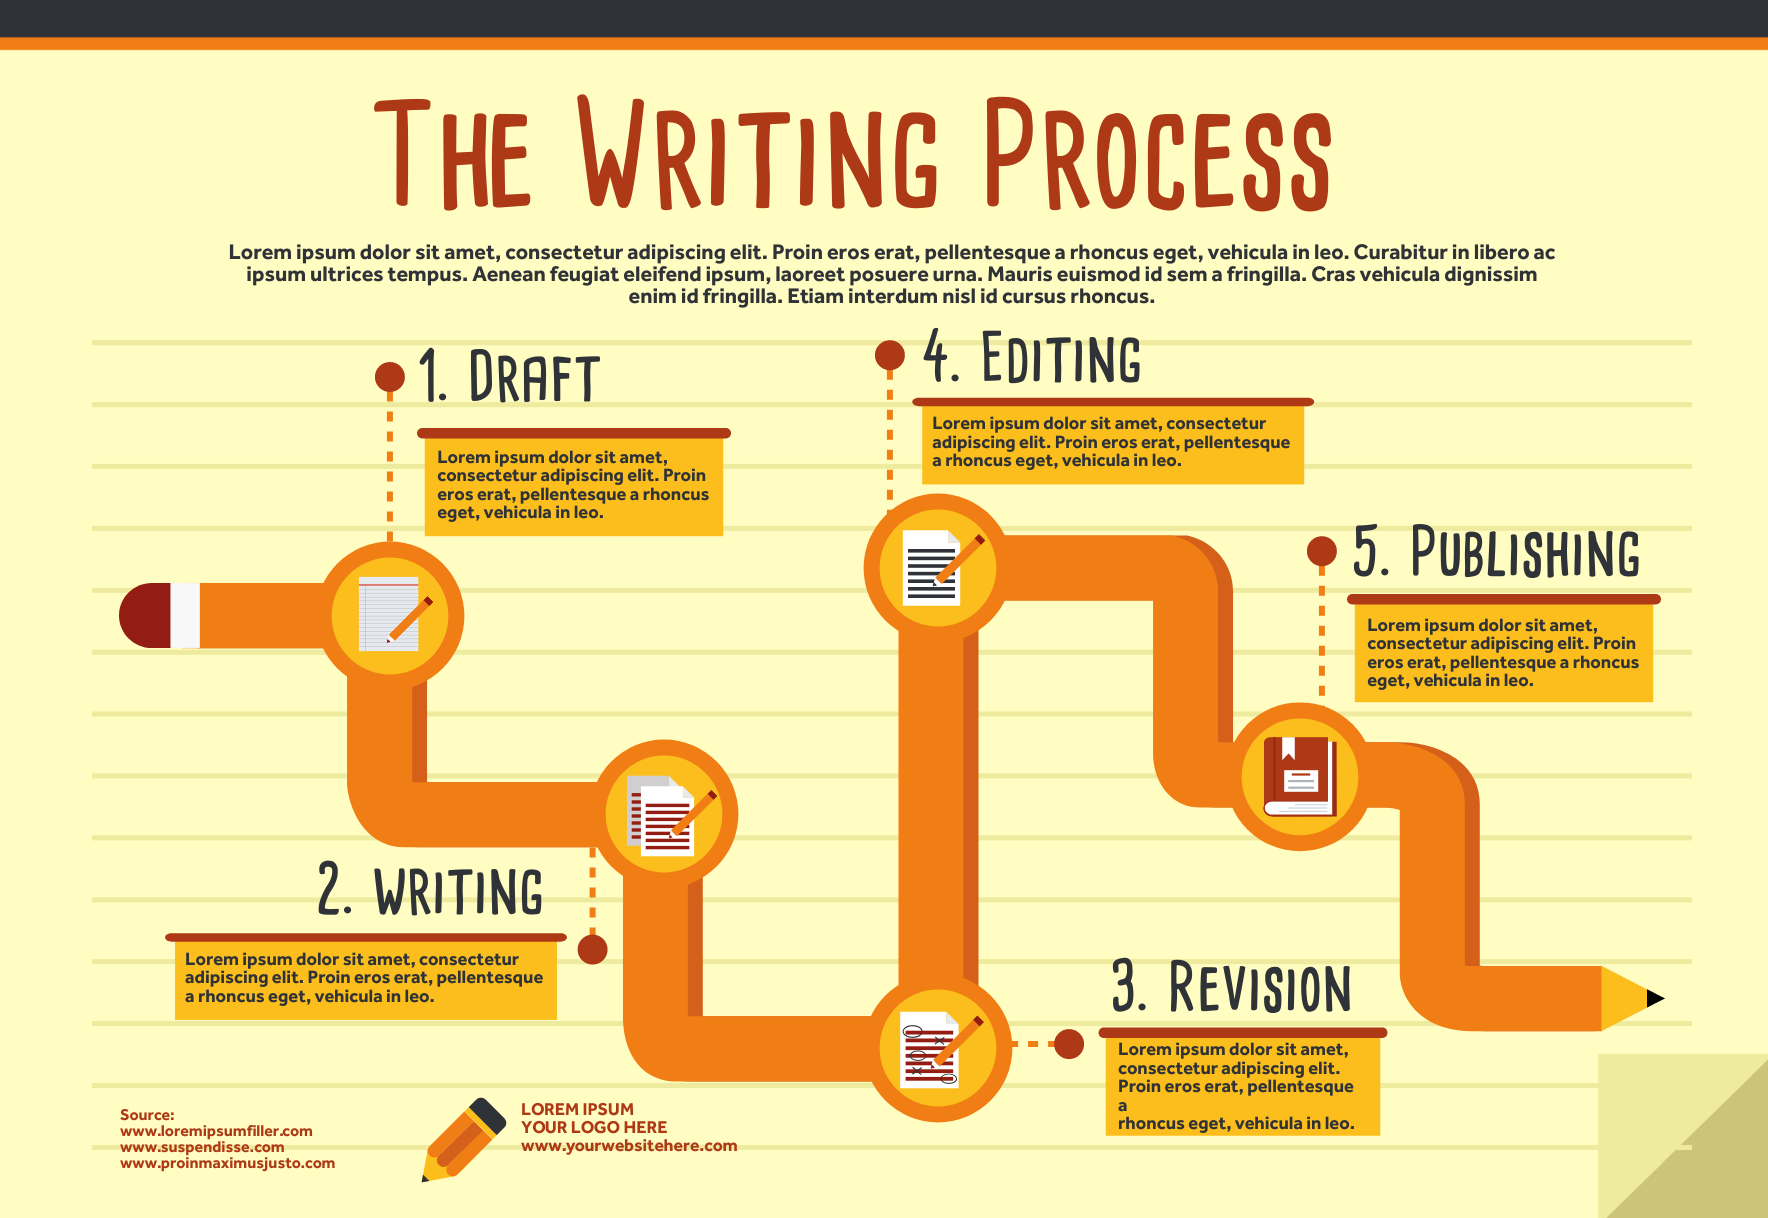 creative writing process